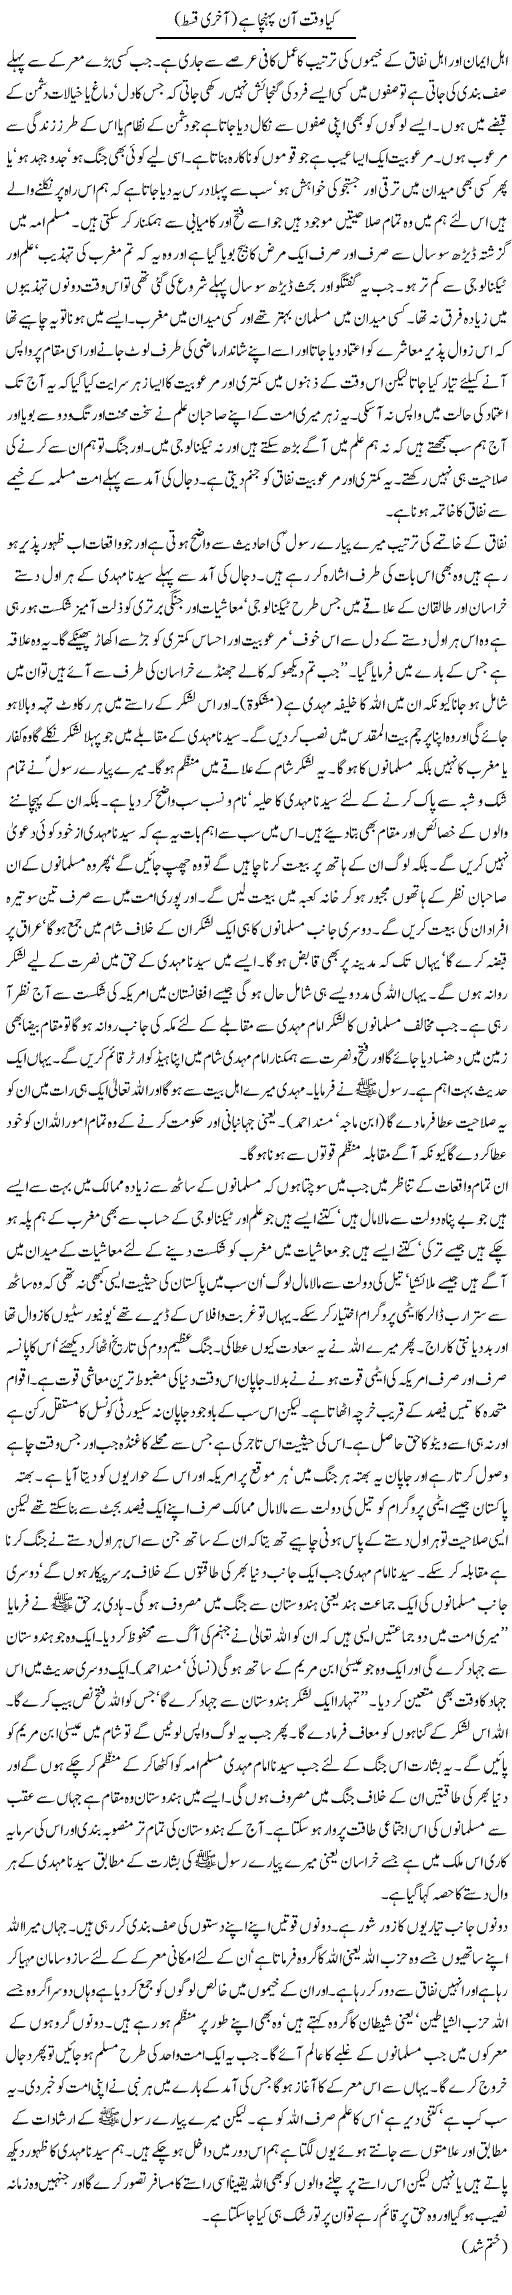 Muslim History Express Column Orya Maqbool 15 October 2011